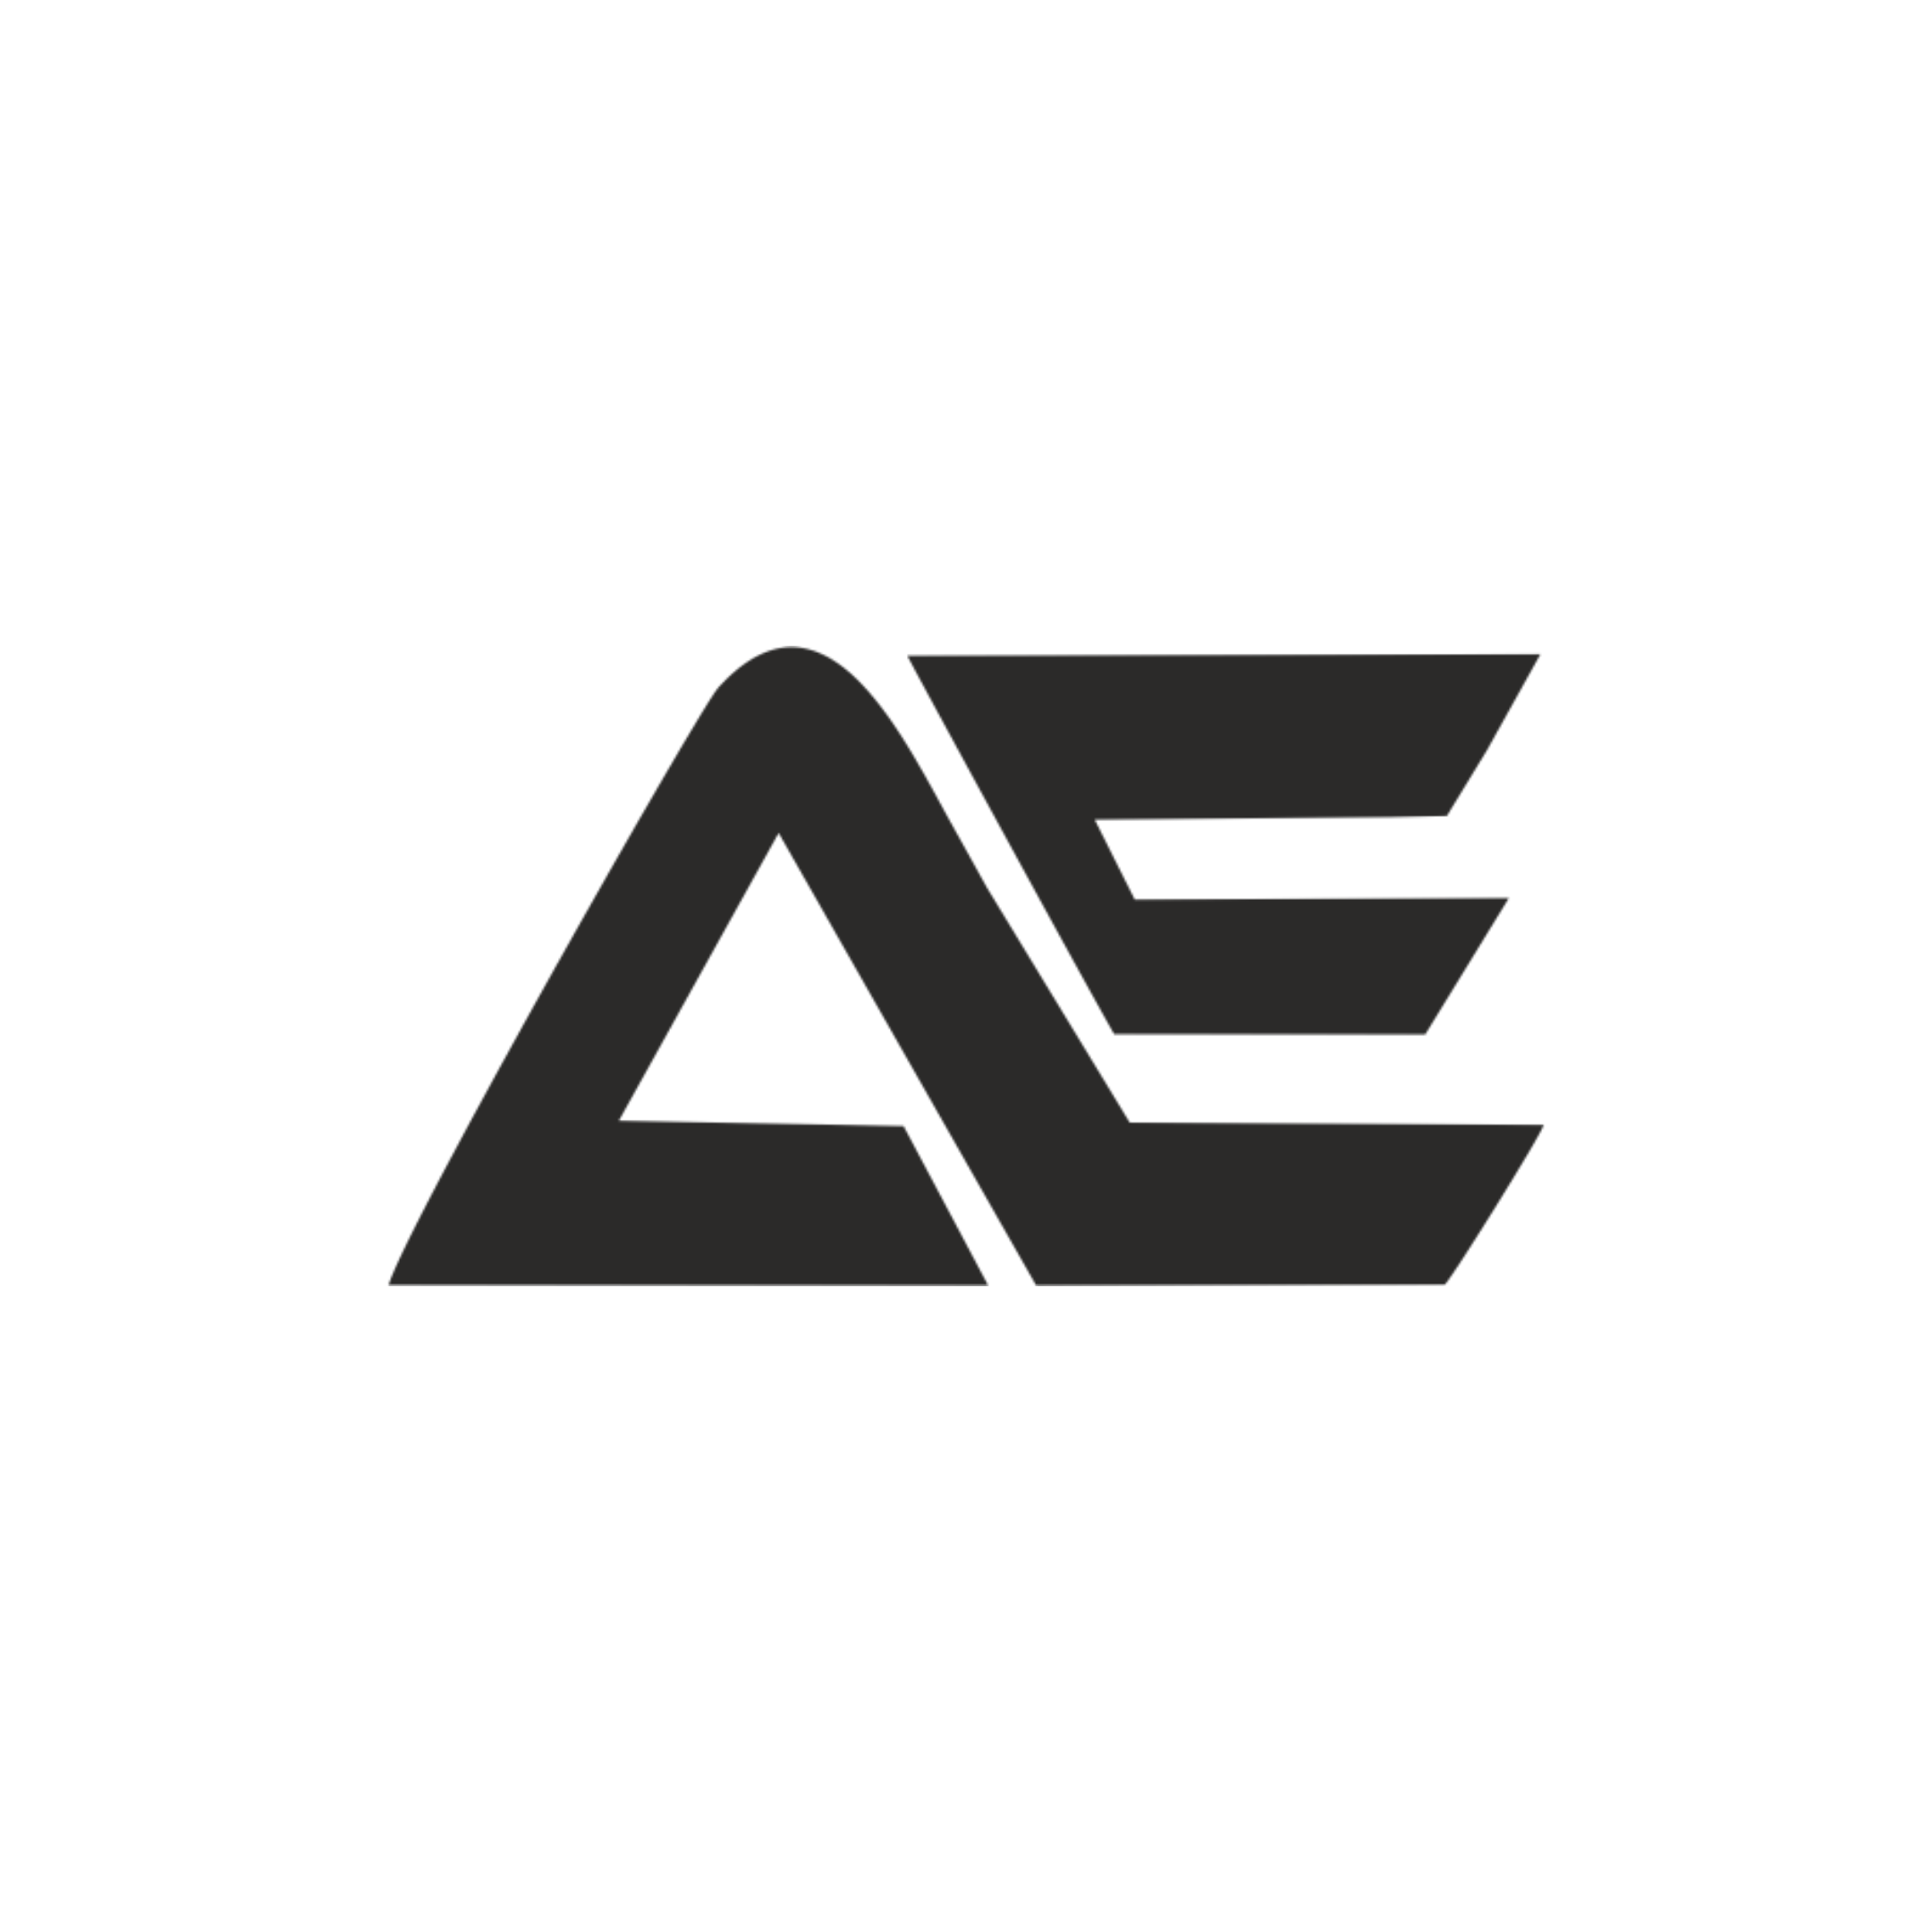 Логотип. Æ логотип. Эмблема ае. AE буква.